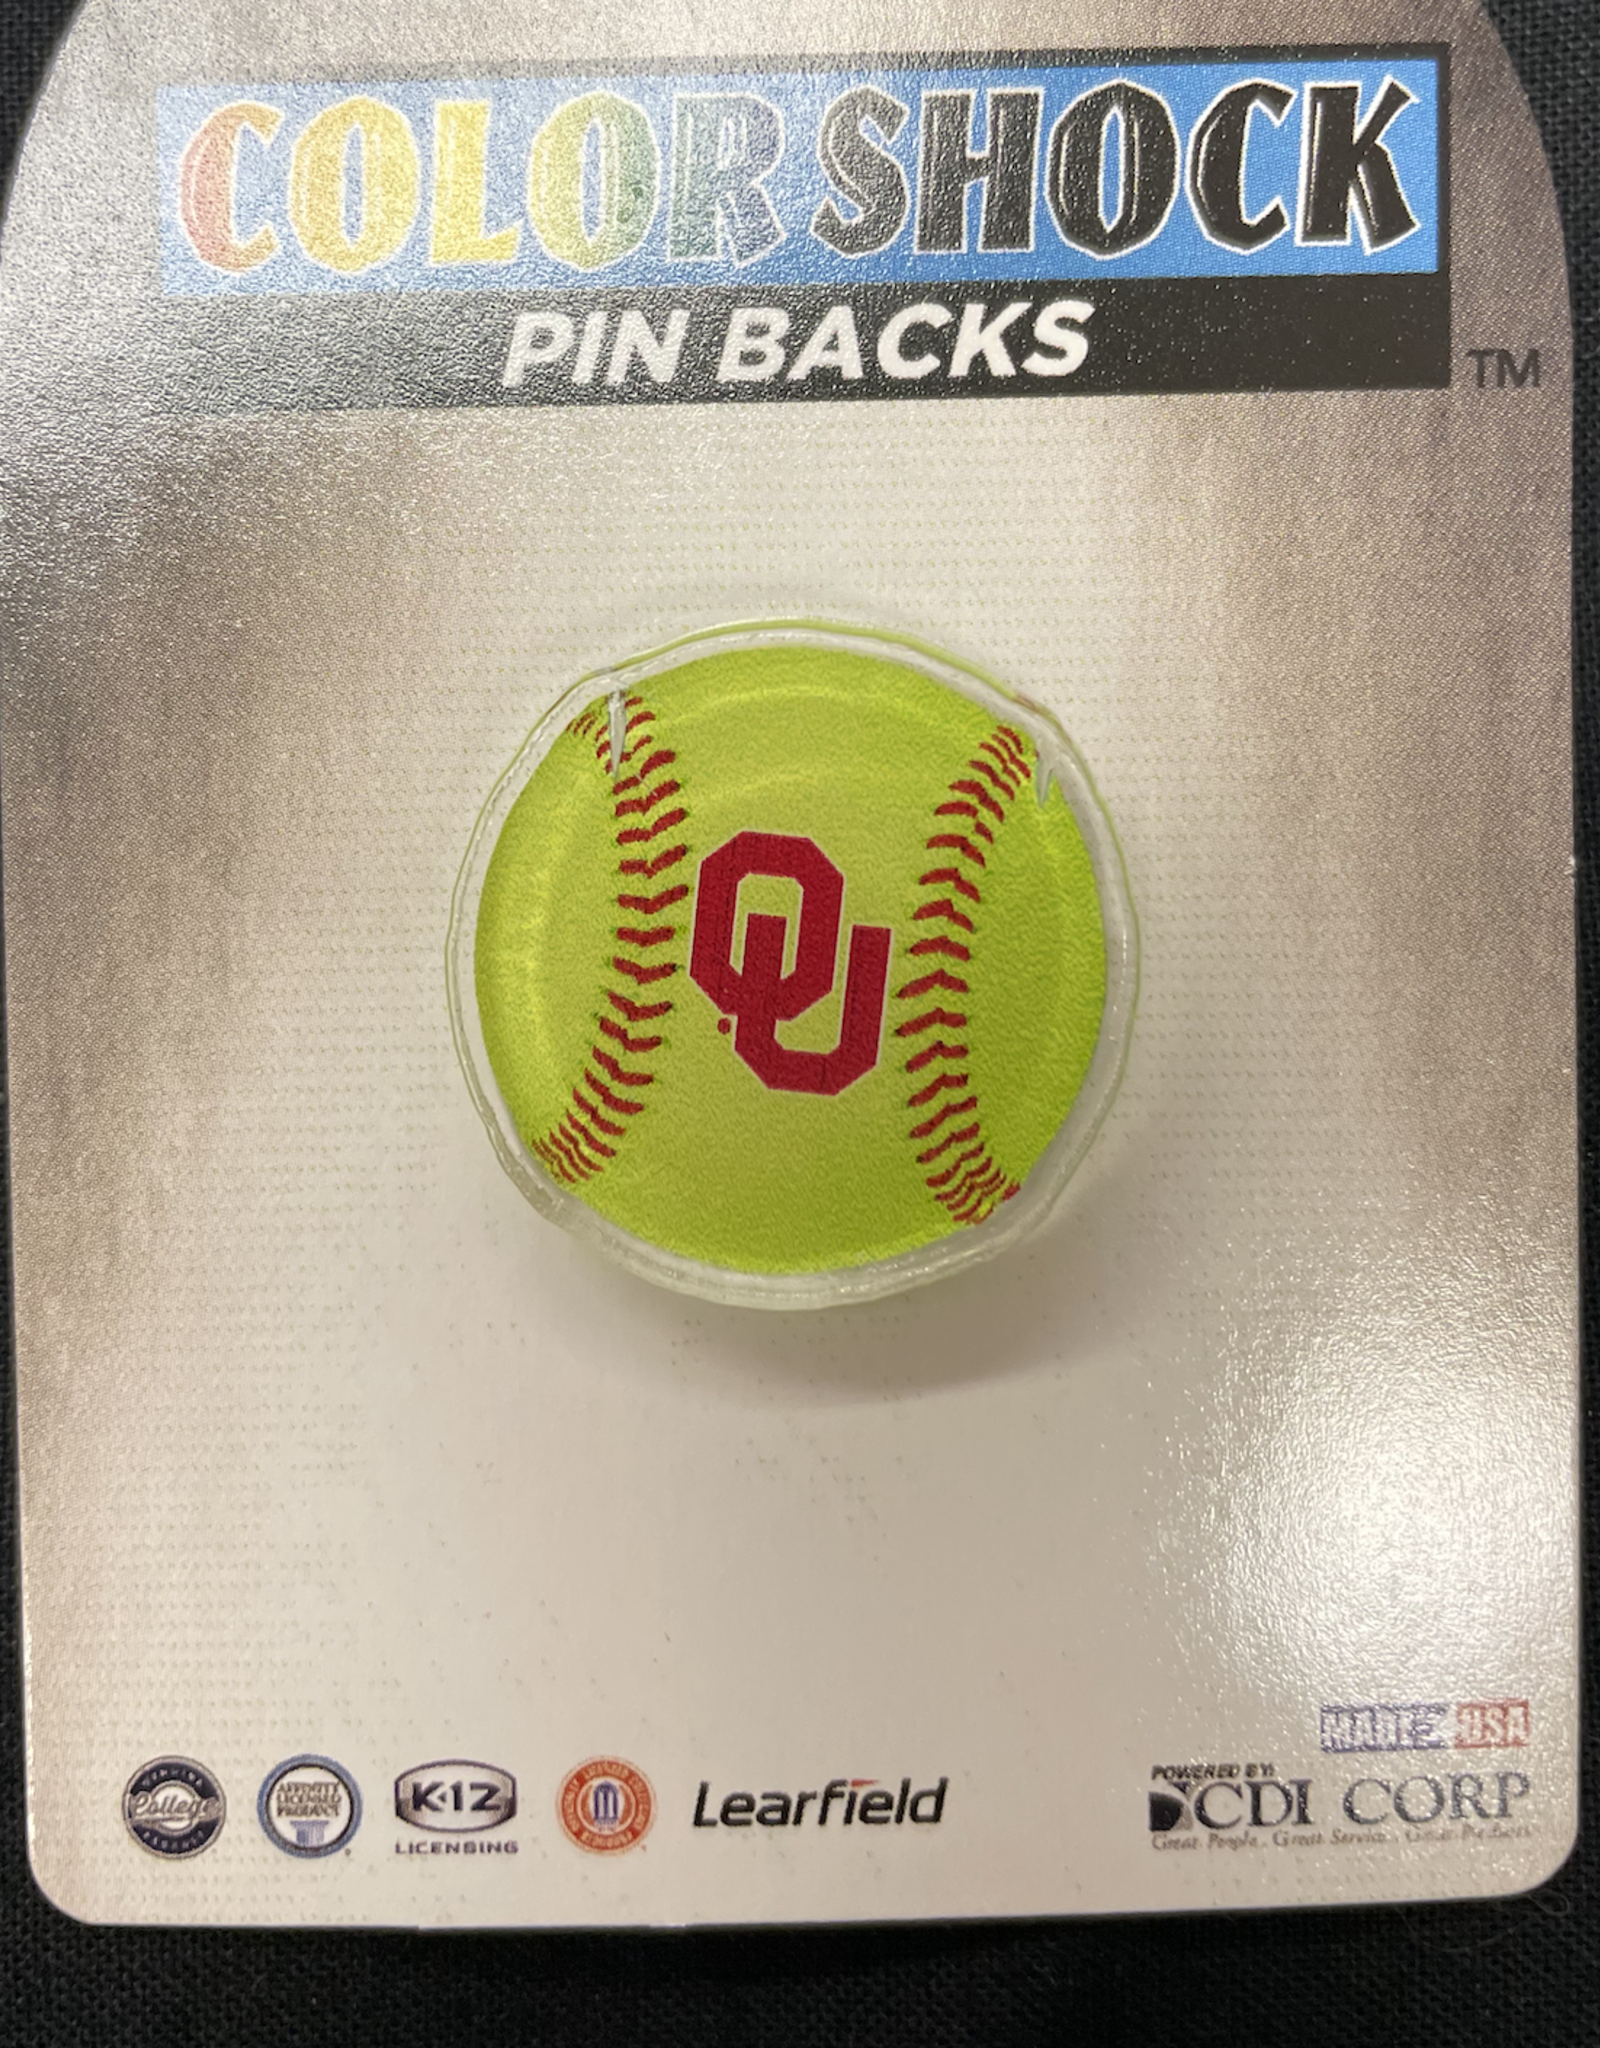 Color Shock OU Softball Acrylic Lapel Pin